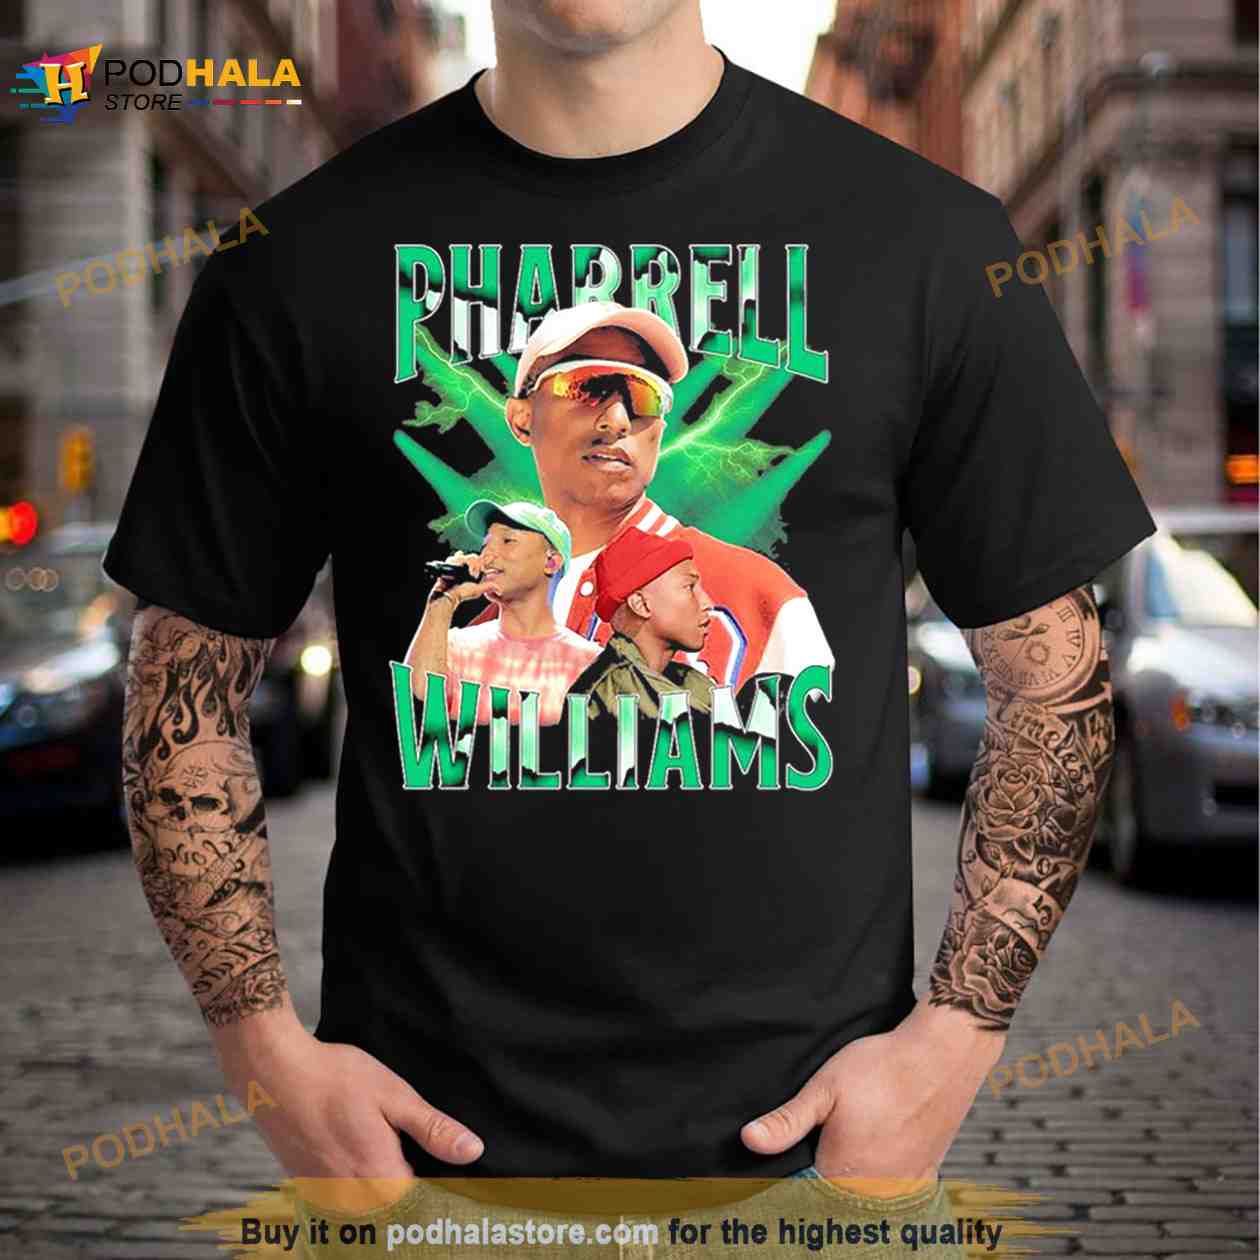 Pharrell Williams Shirt 